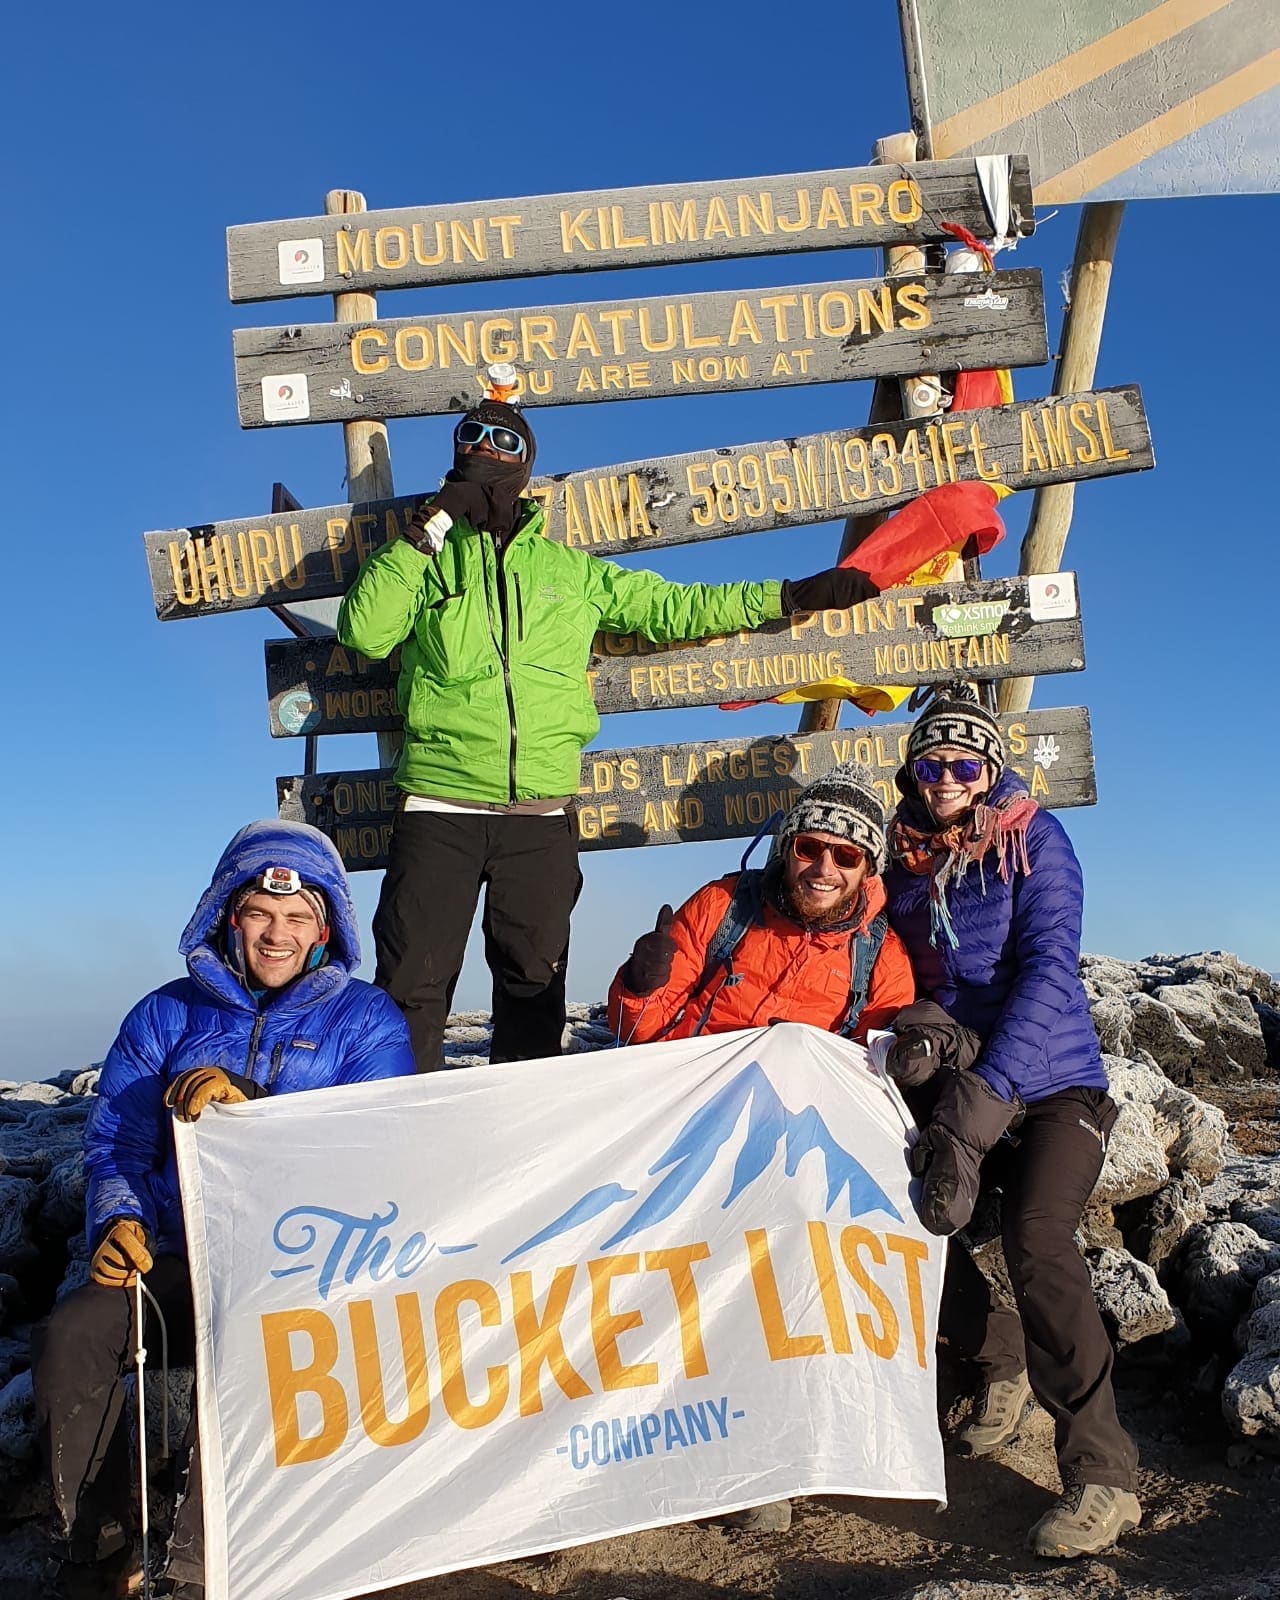 Mount Kilimanjaro Lemosho Route Trip Report 2019 - The Bucket List Company